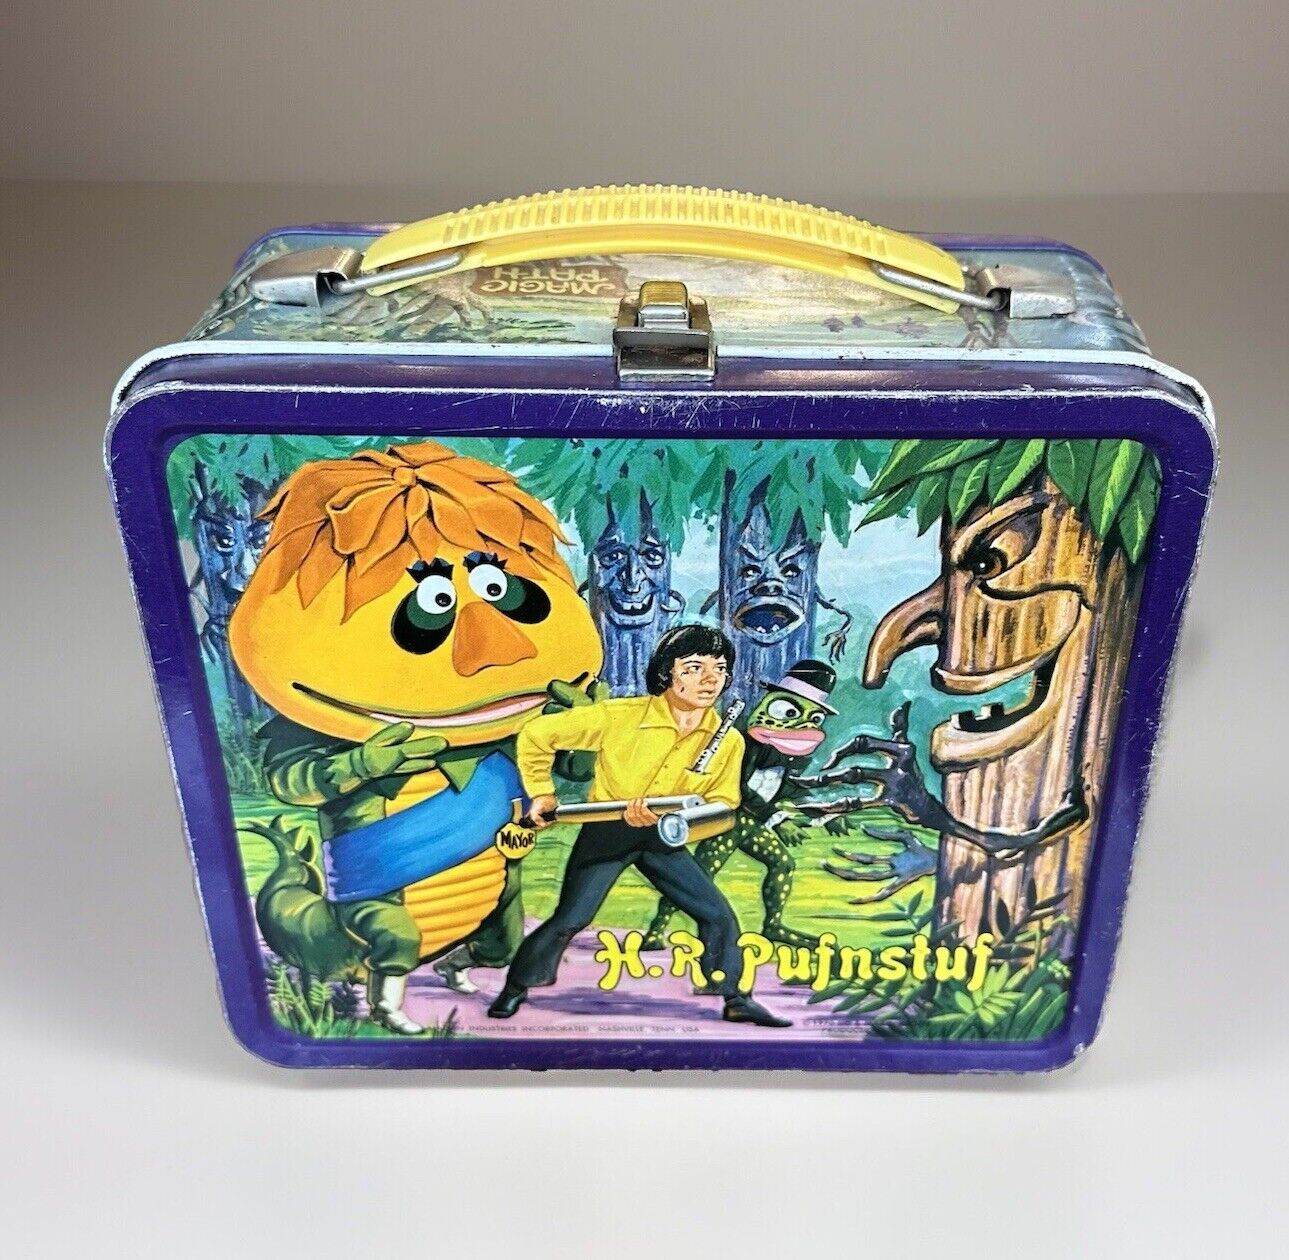 Vintage 1970 H.R Pufnstuf Lunch Box No Thermos RARE Metal Lunchbox Aladdin